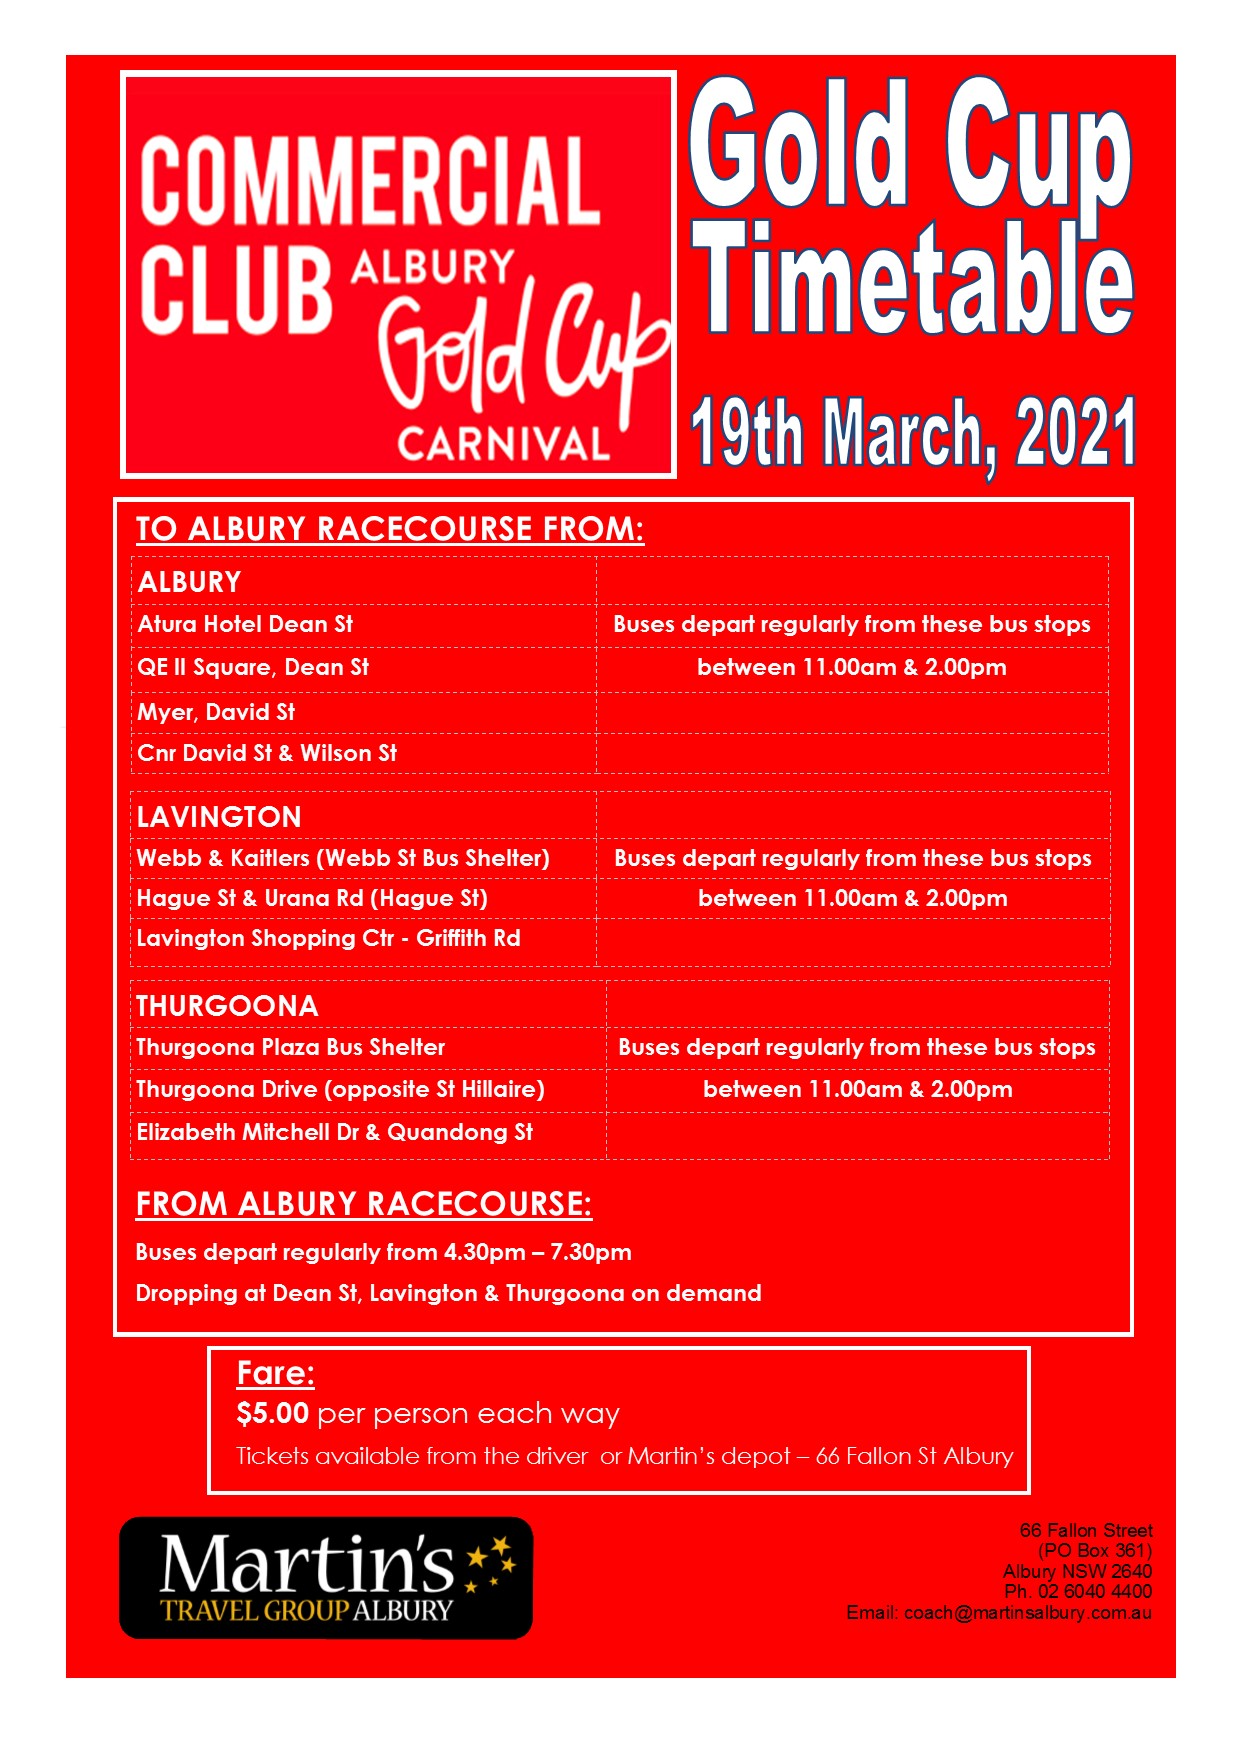 Albury Gold Cup Timetable Martin's Albury